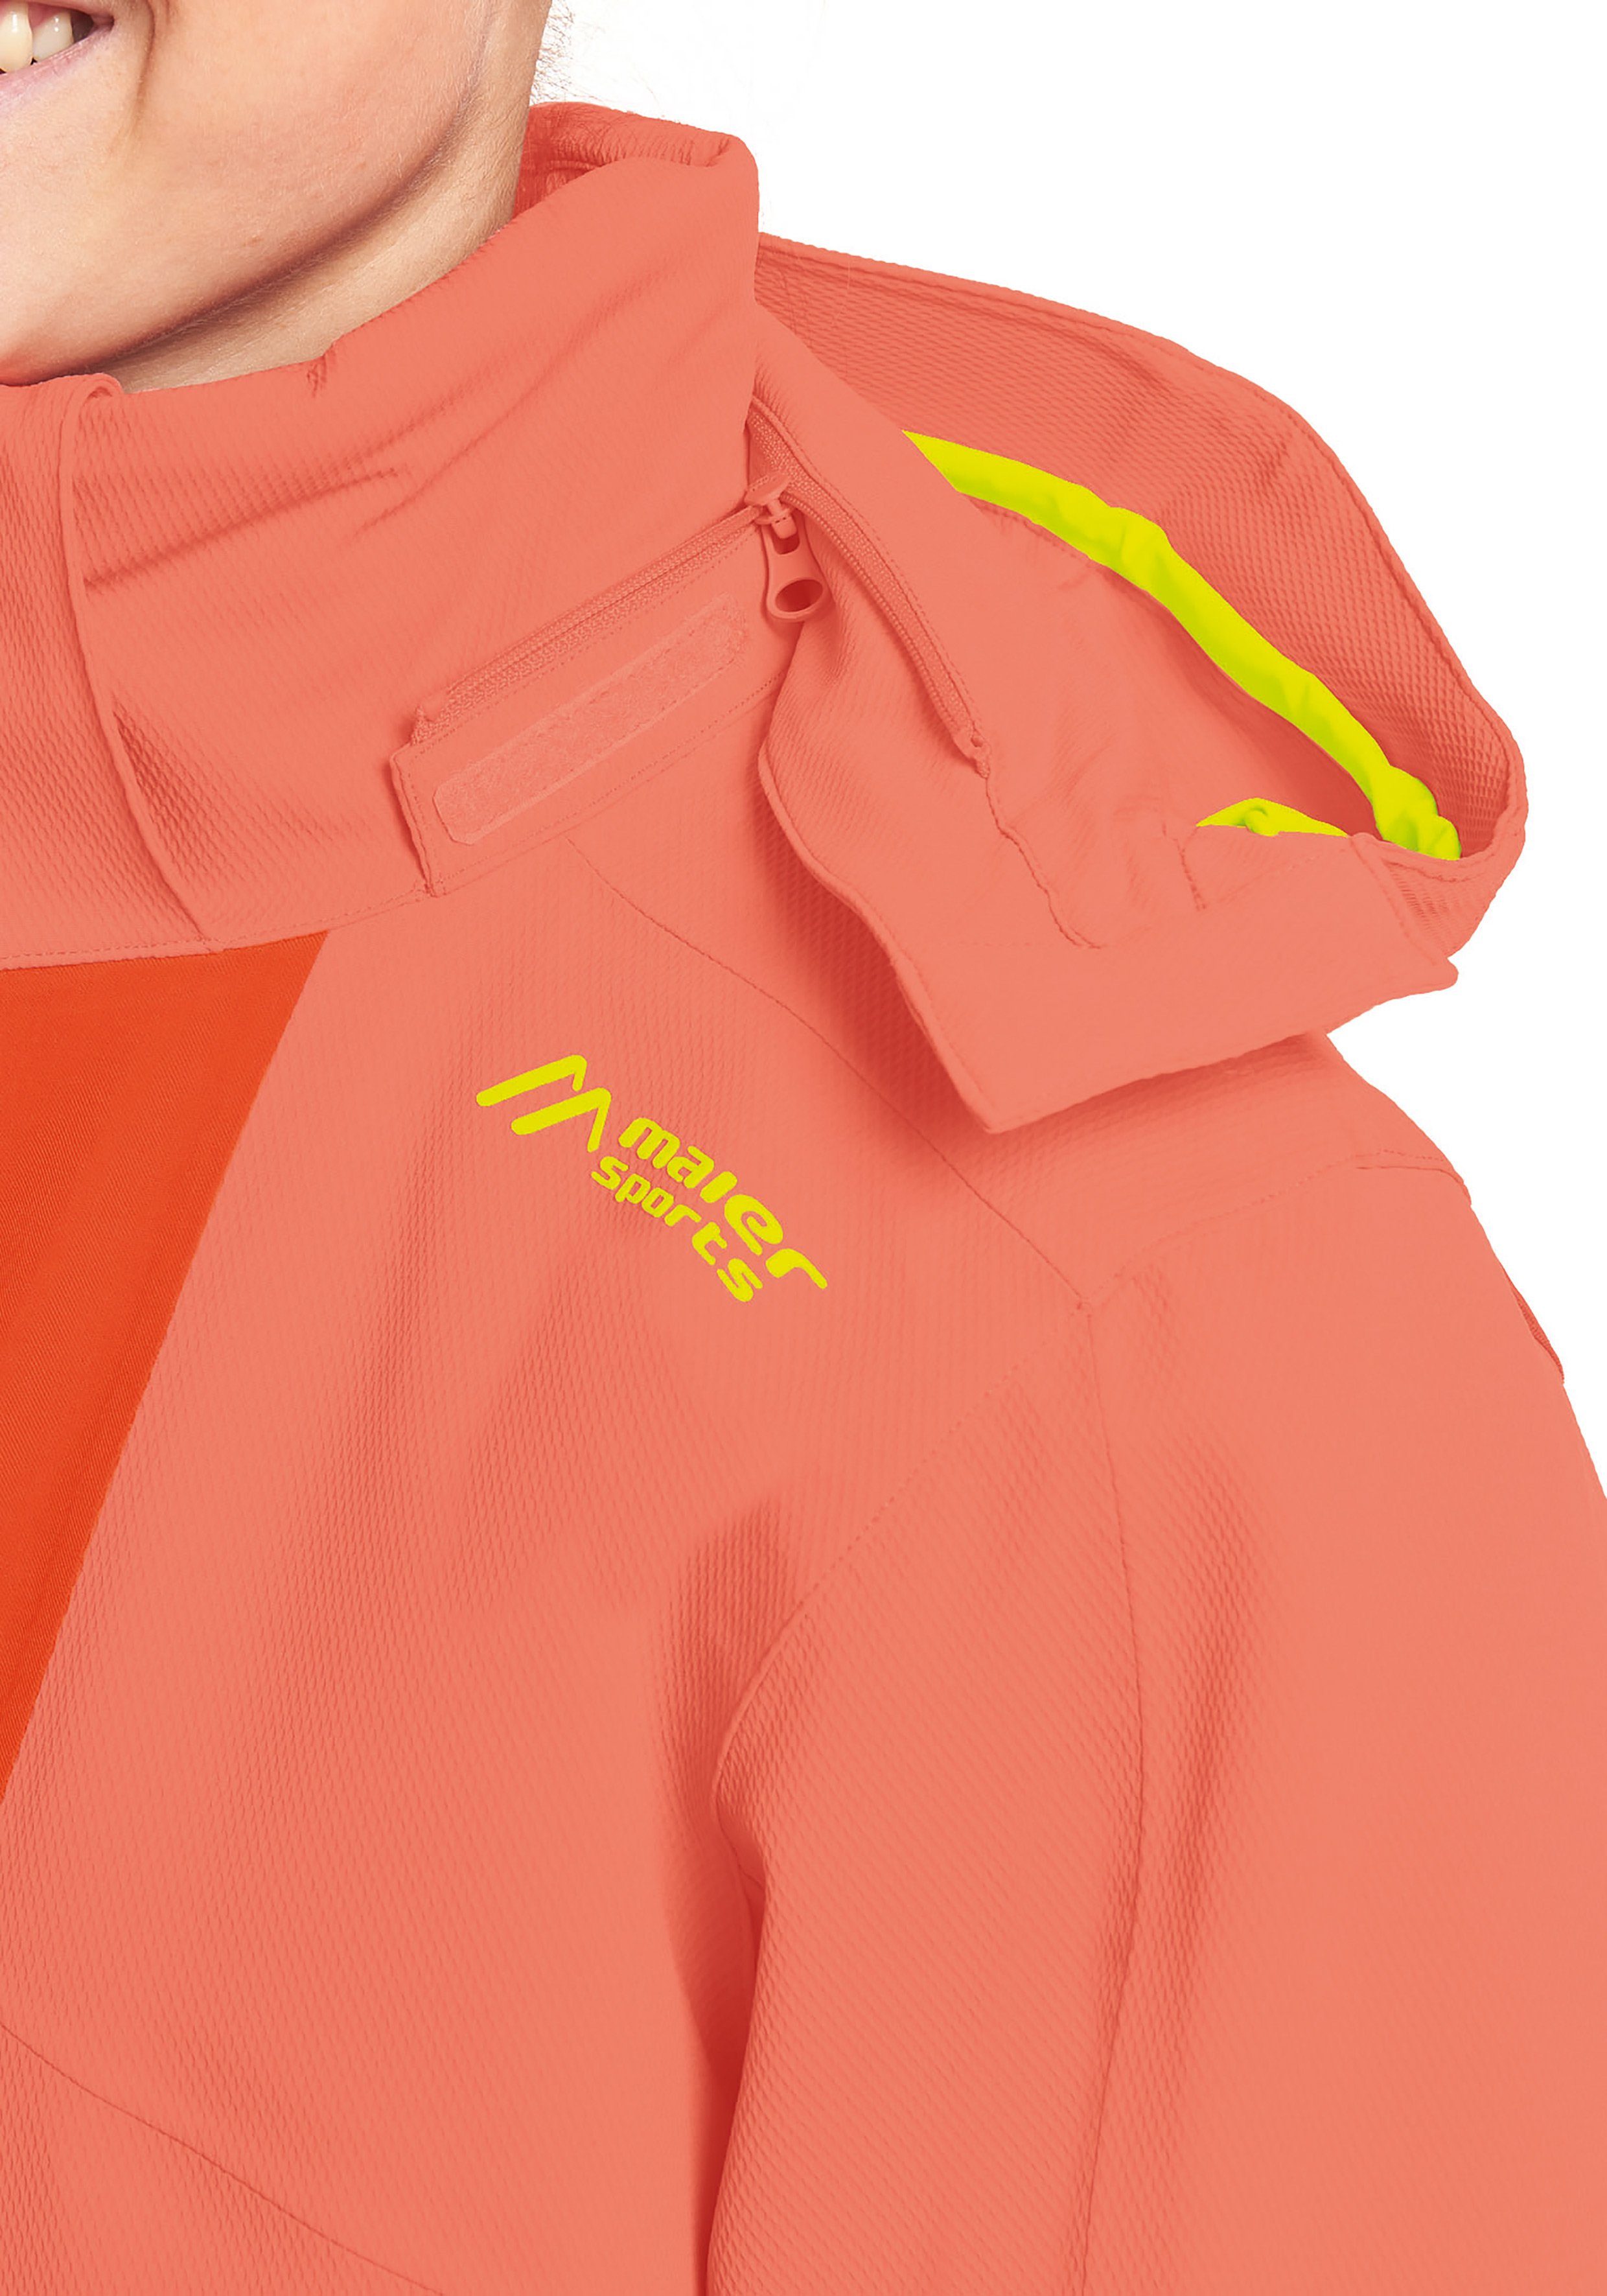 Piste Maier orangerot Fast W Skijacke Skijacke für Modern Freeride perfekt Impulse Sports – designte und